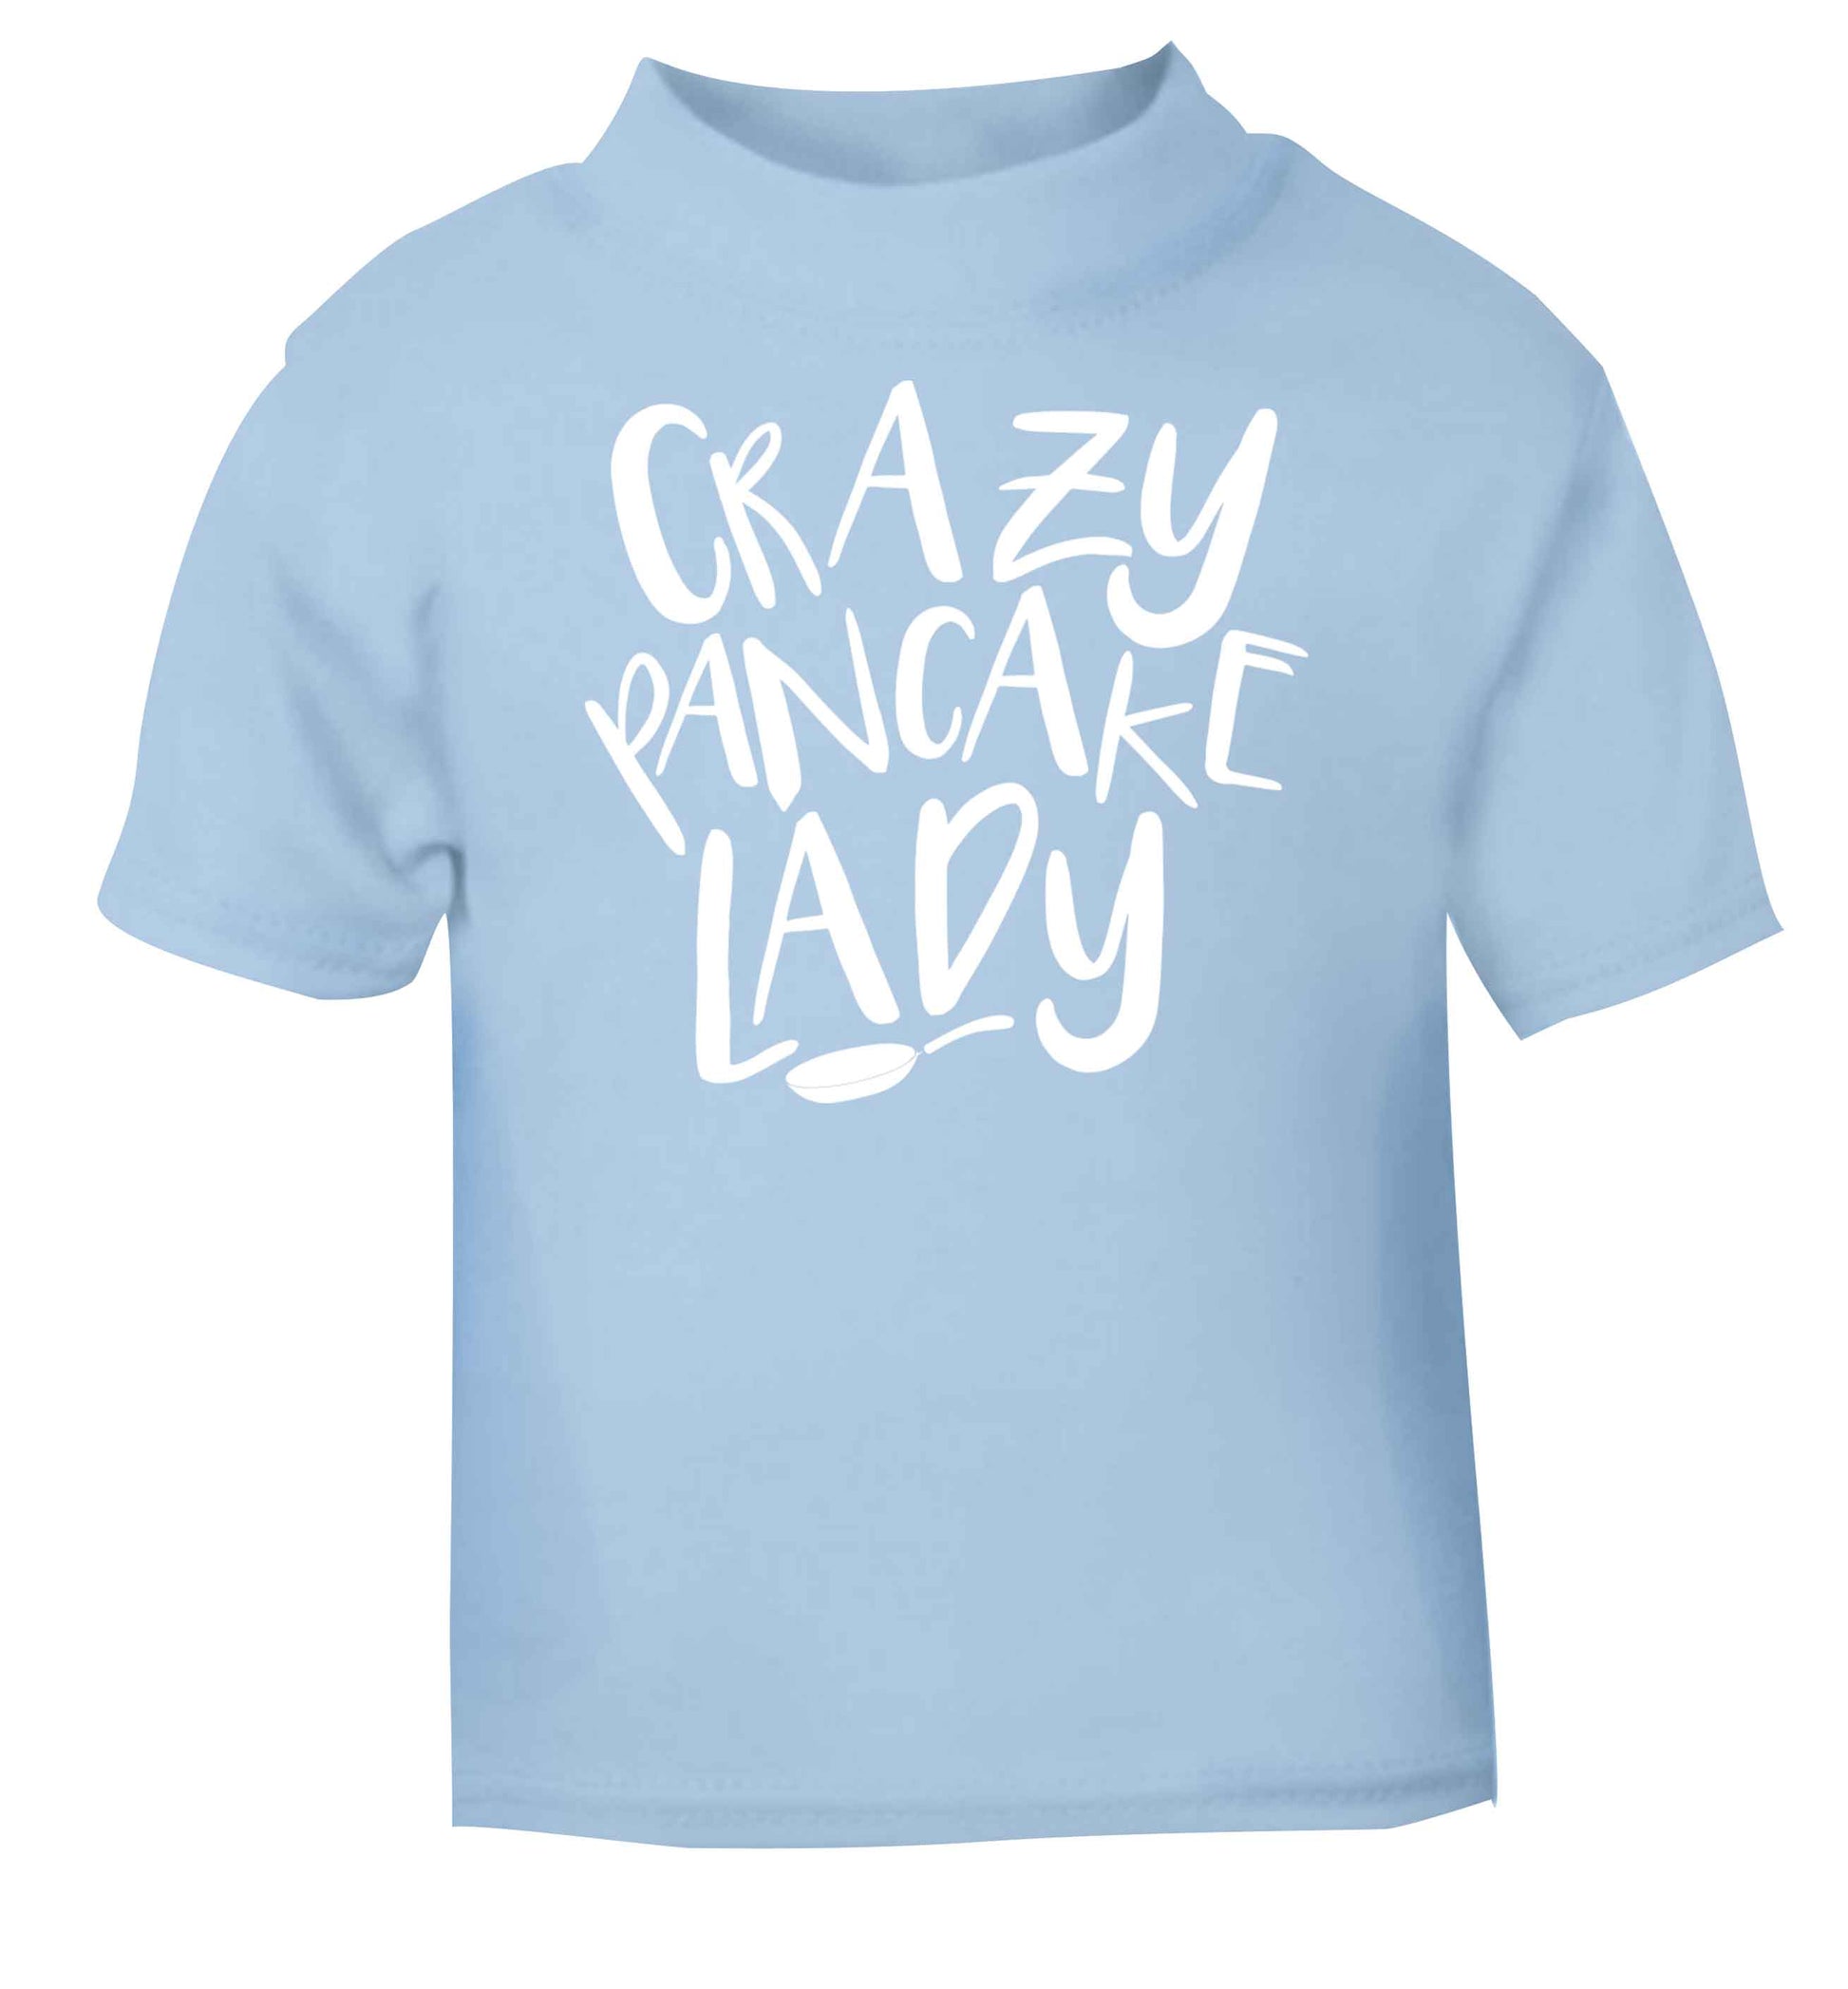 Crazy pancake lady light blue baby toddler Tshirt 2 Years